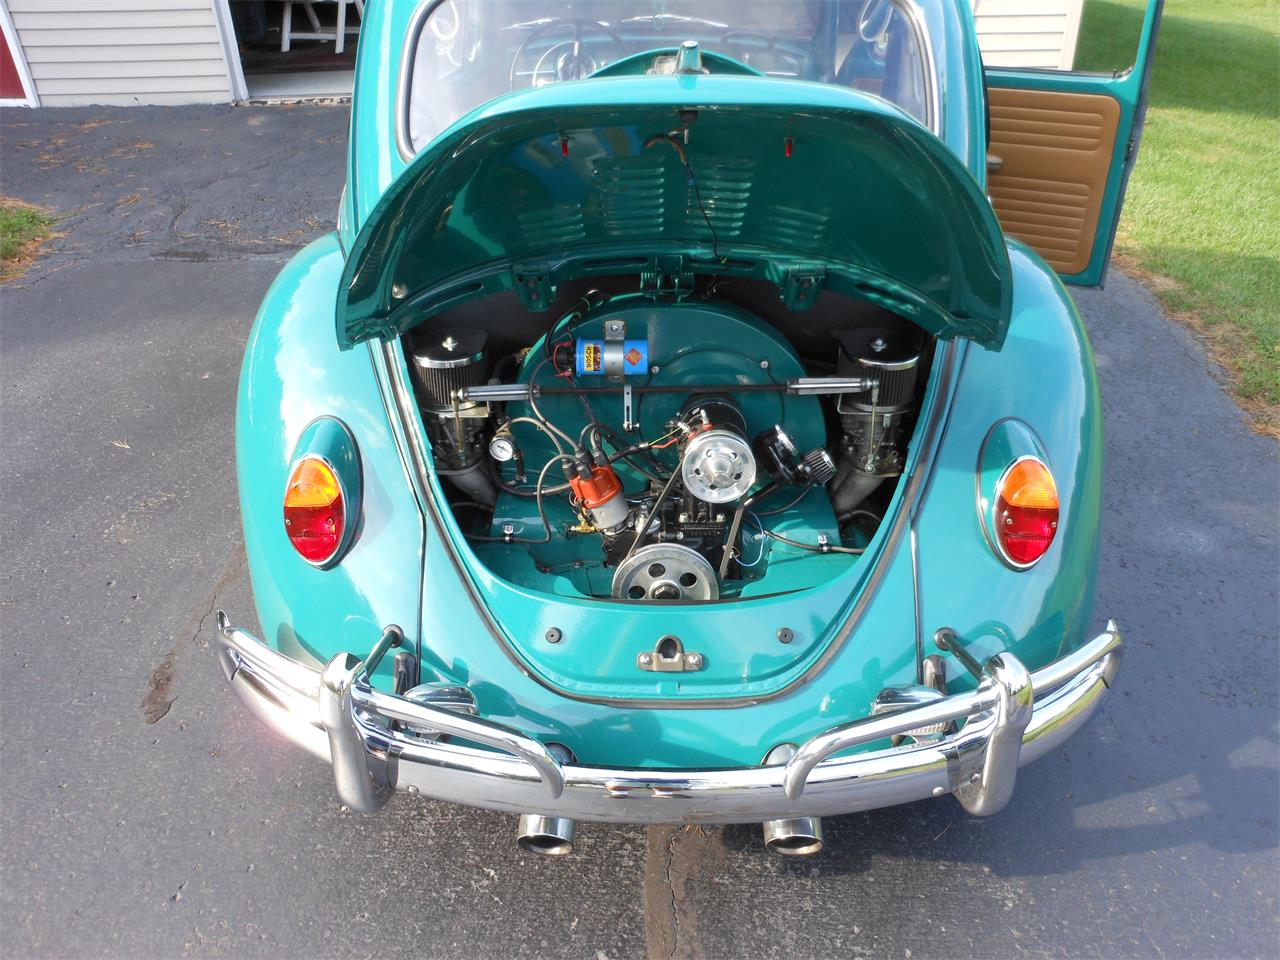 1967 Volkswagen Beetle for Sale | ClassicCars.com | CC-1187141